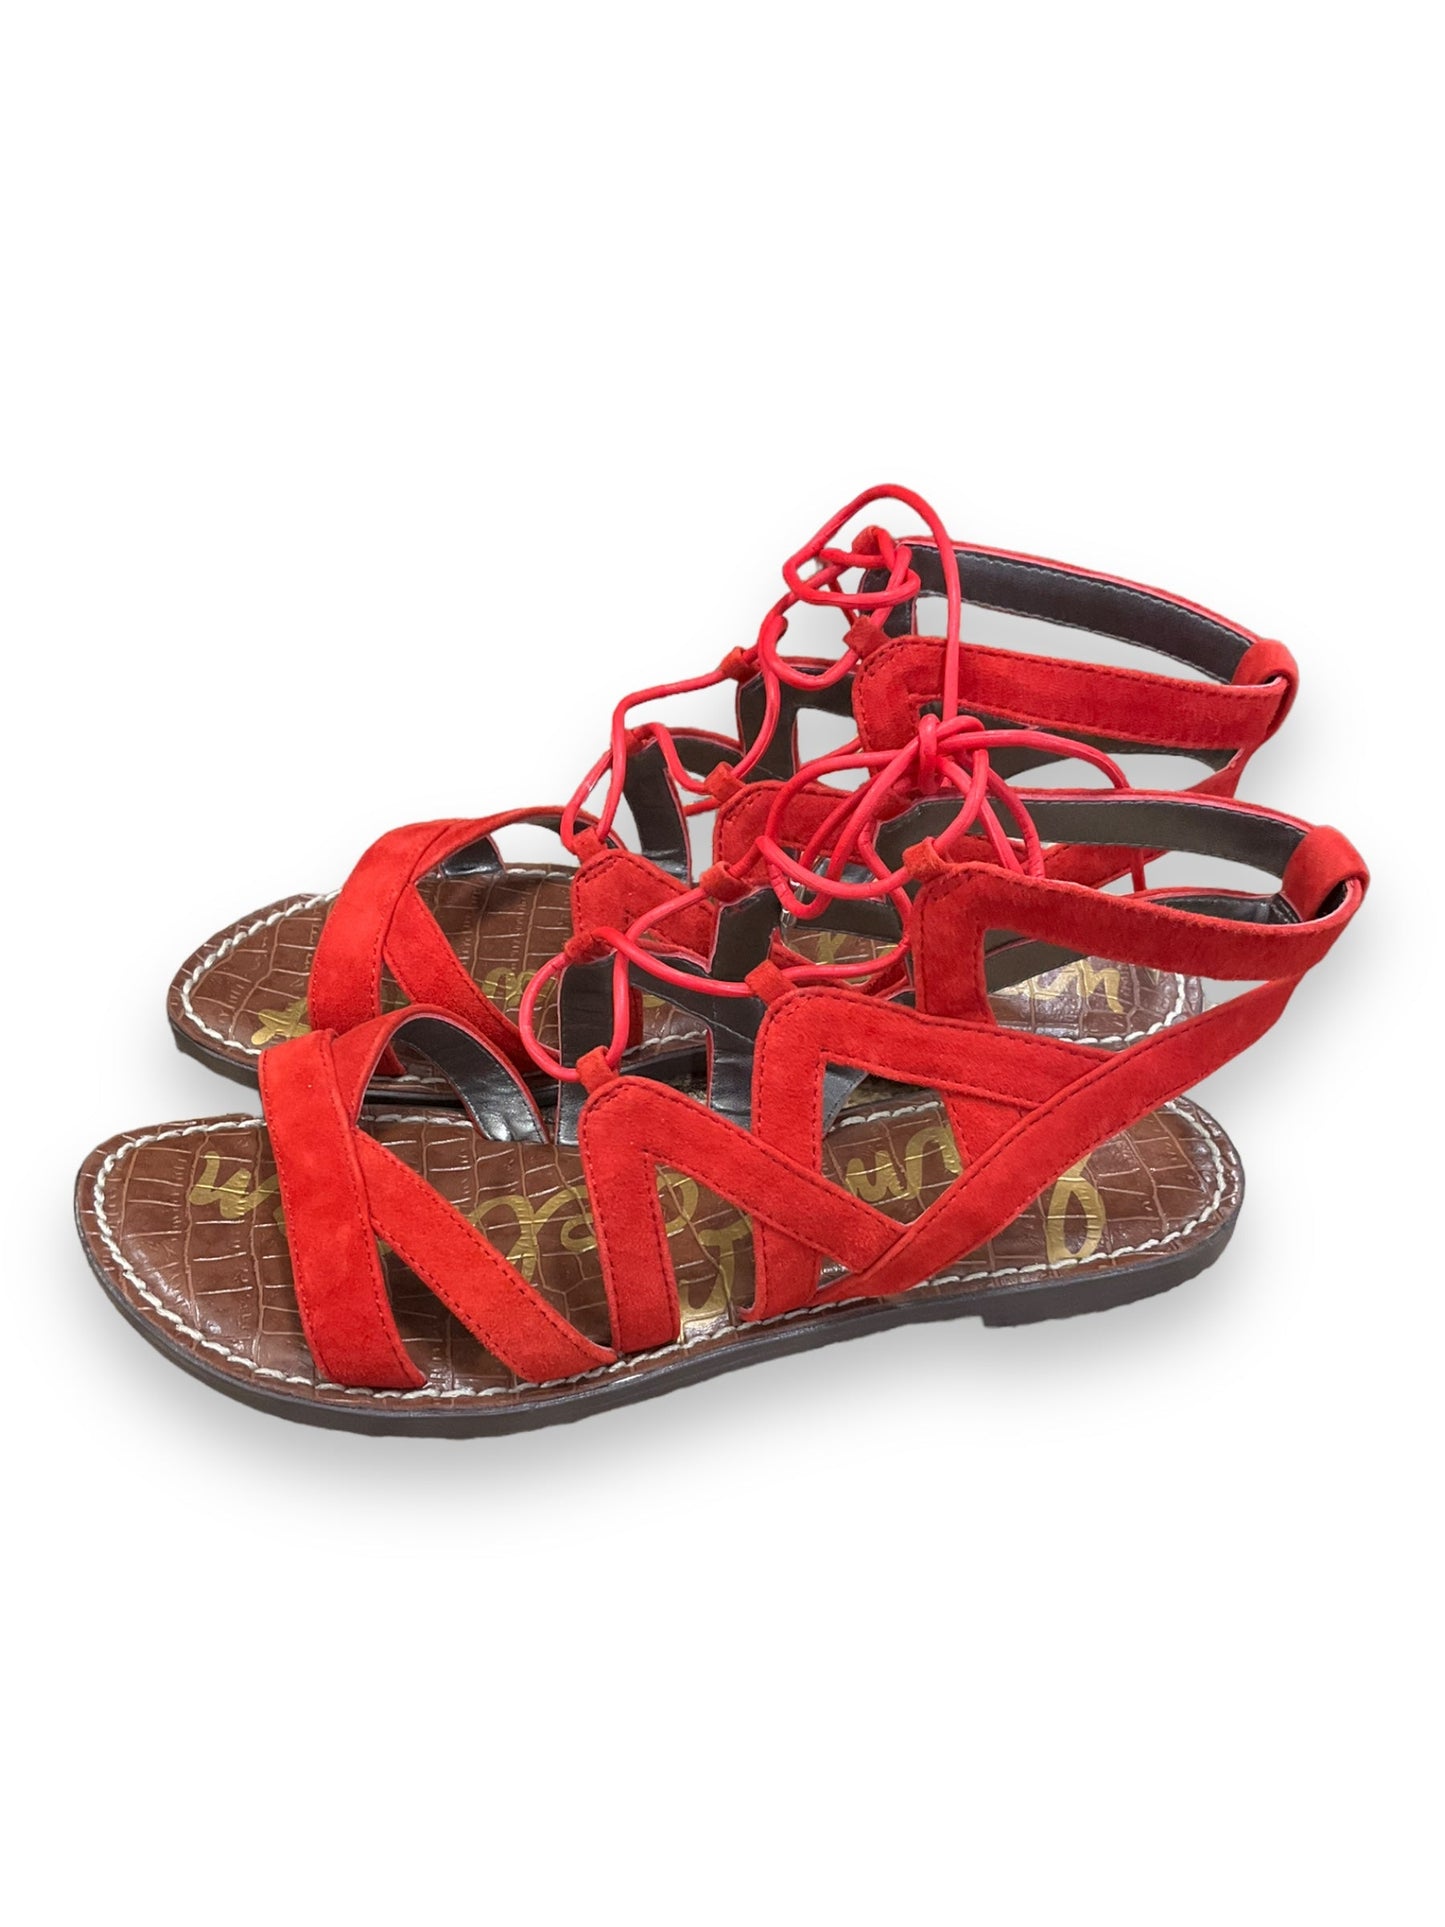 Sandals Flats By Sam Edelman  Size: 6.5